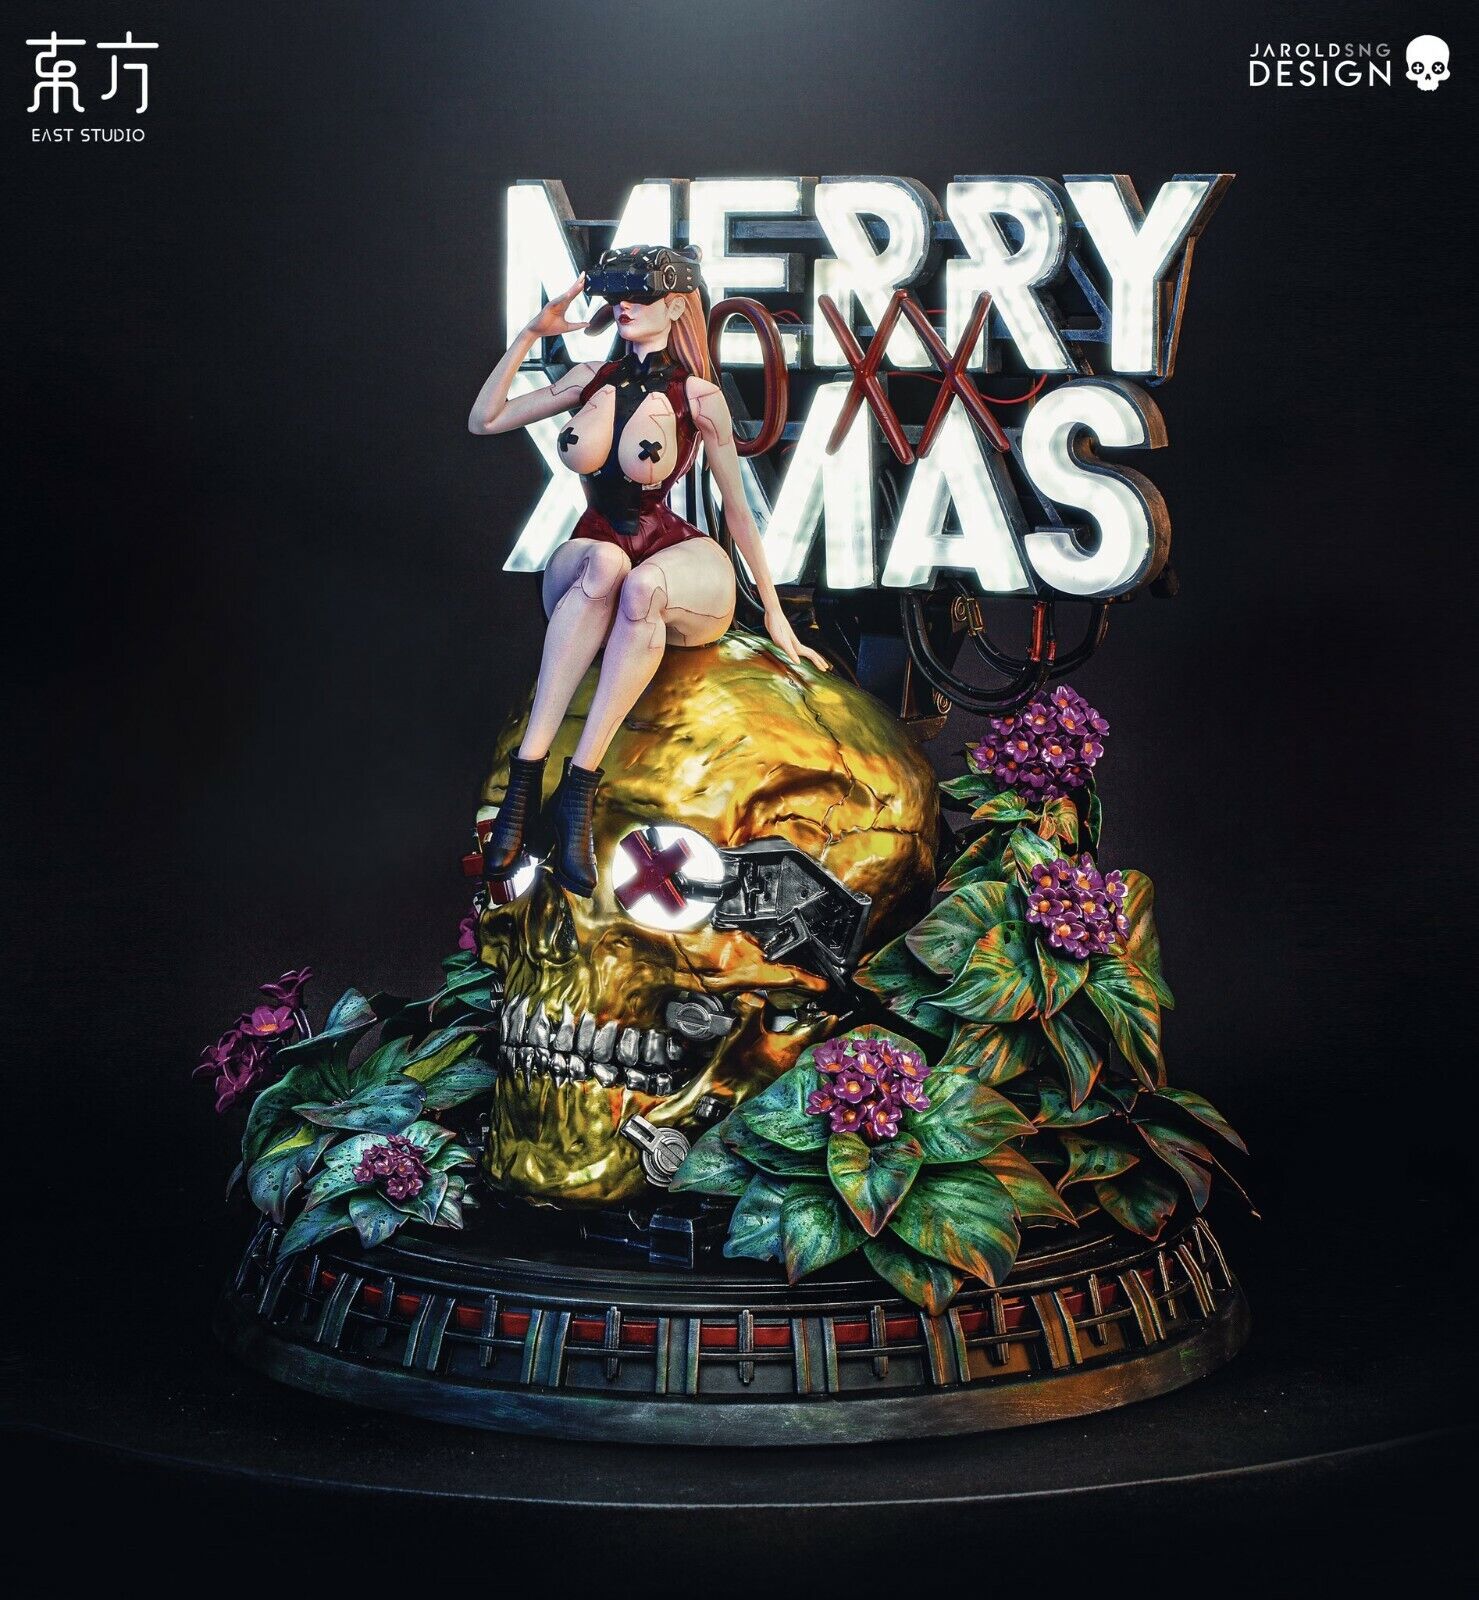 【In-Stock】 Metaverse VR Girl Merry Xmas Gold Christmas LED GK Statue East Studio